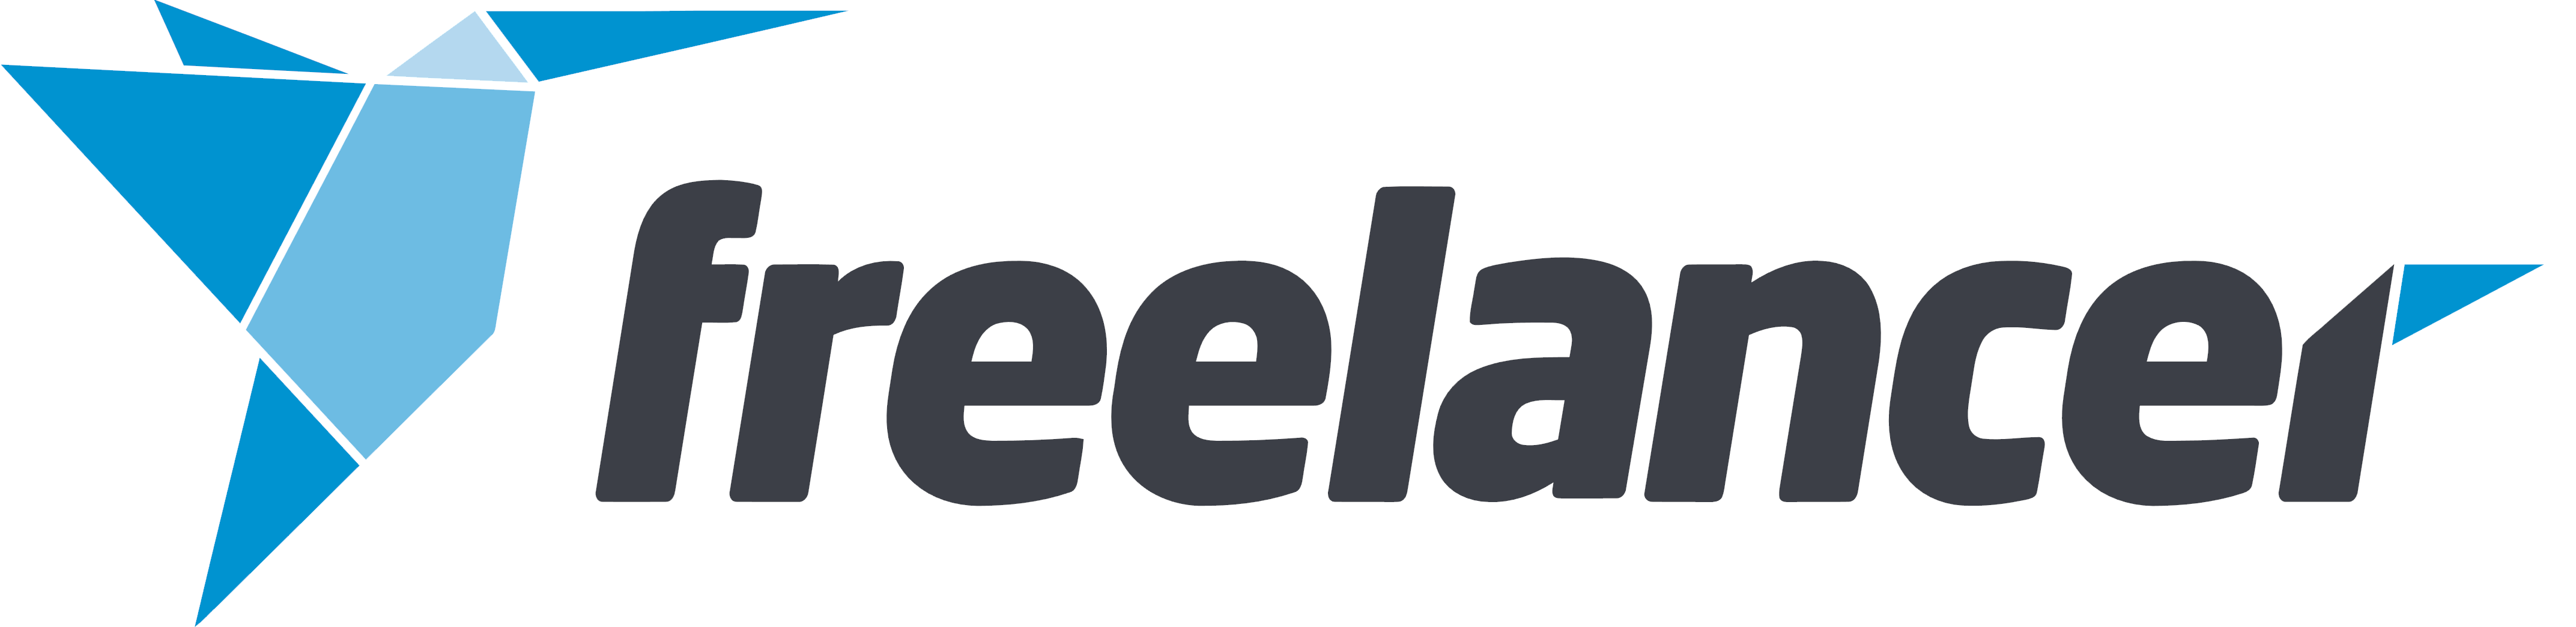 Freelancer-logo